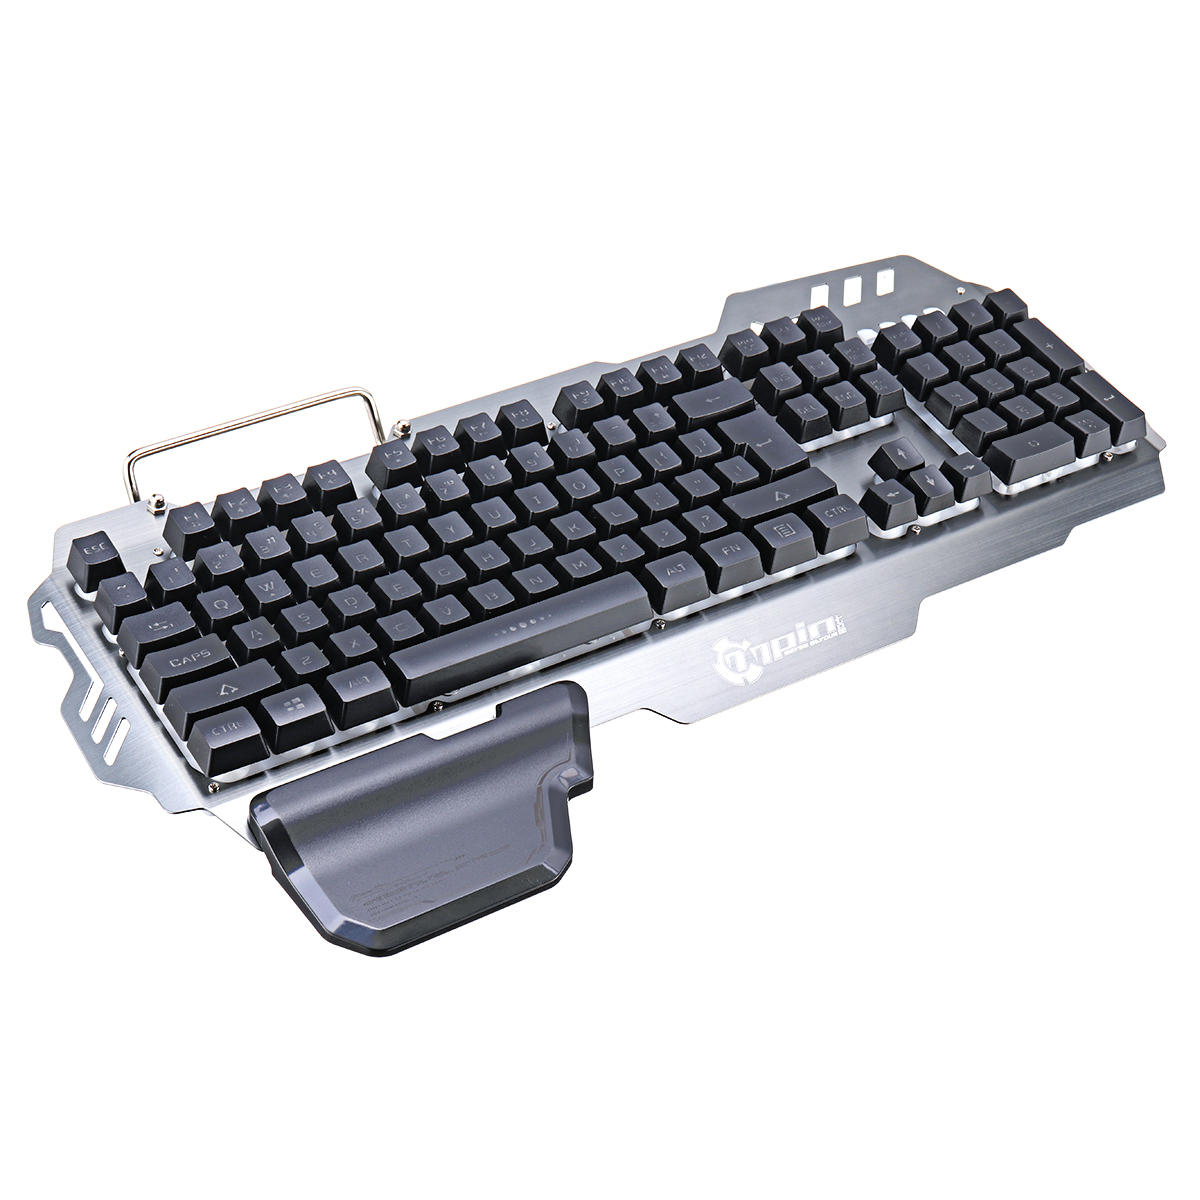 PK-900 104 Keys USB Wired Backlit Mechanical-Handfeel Gaming Keyboard COD